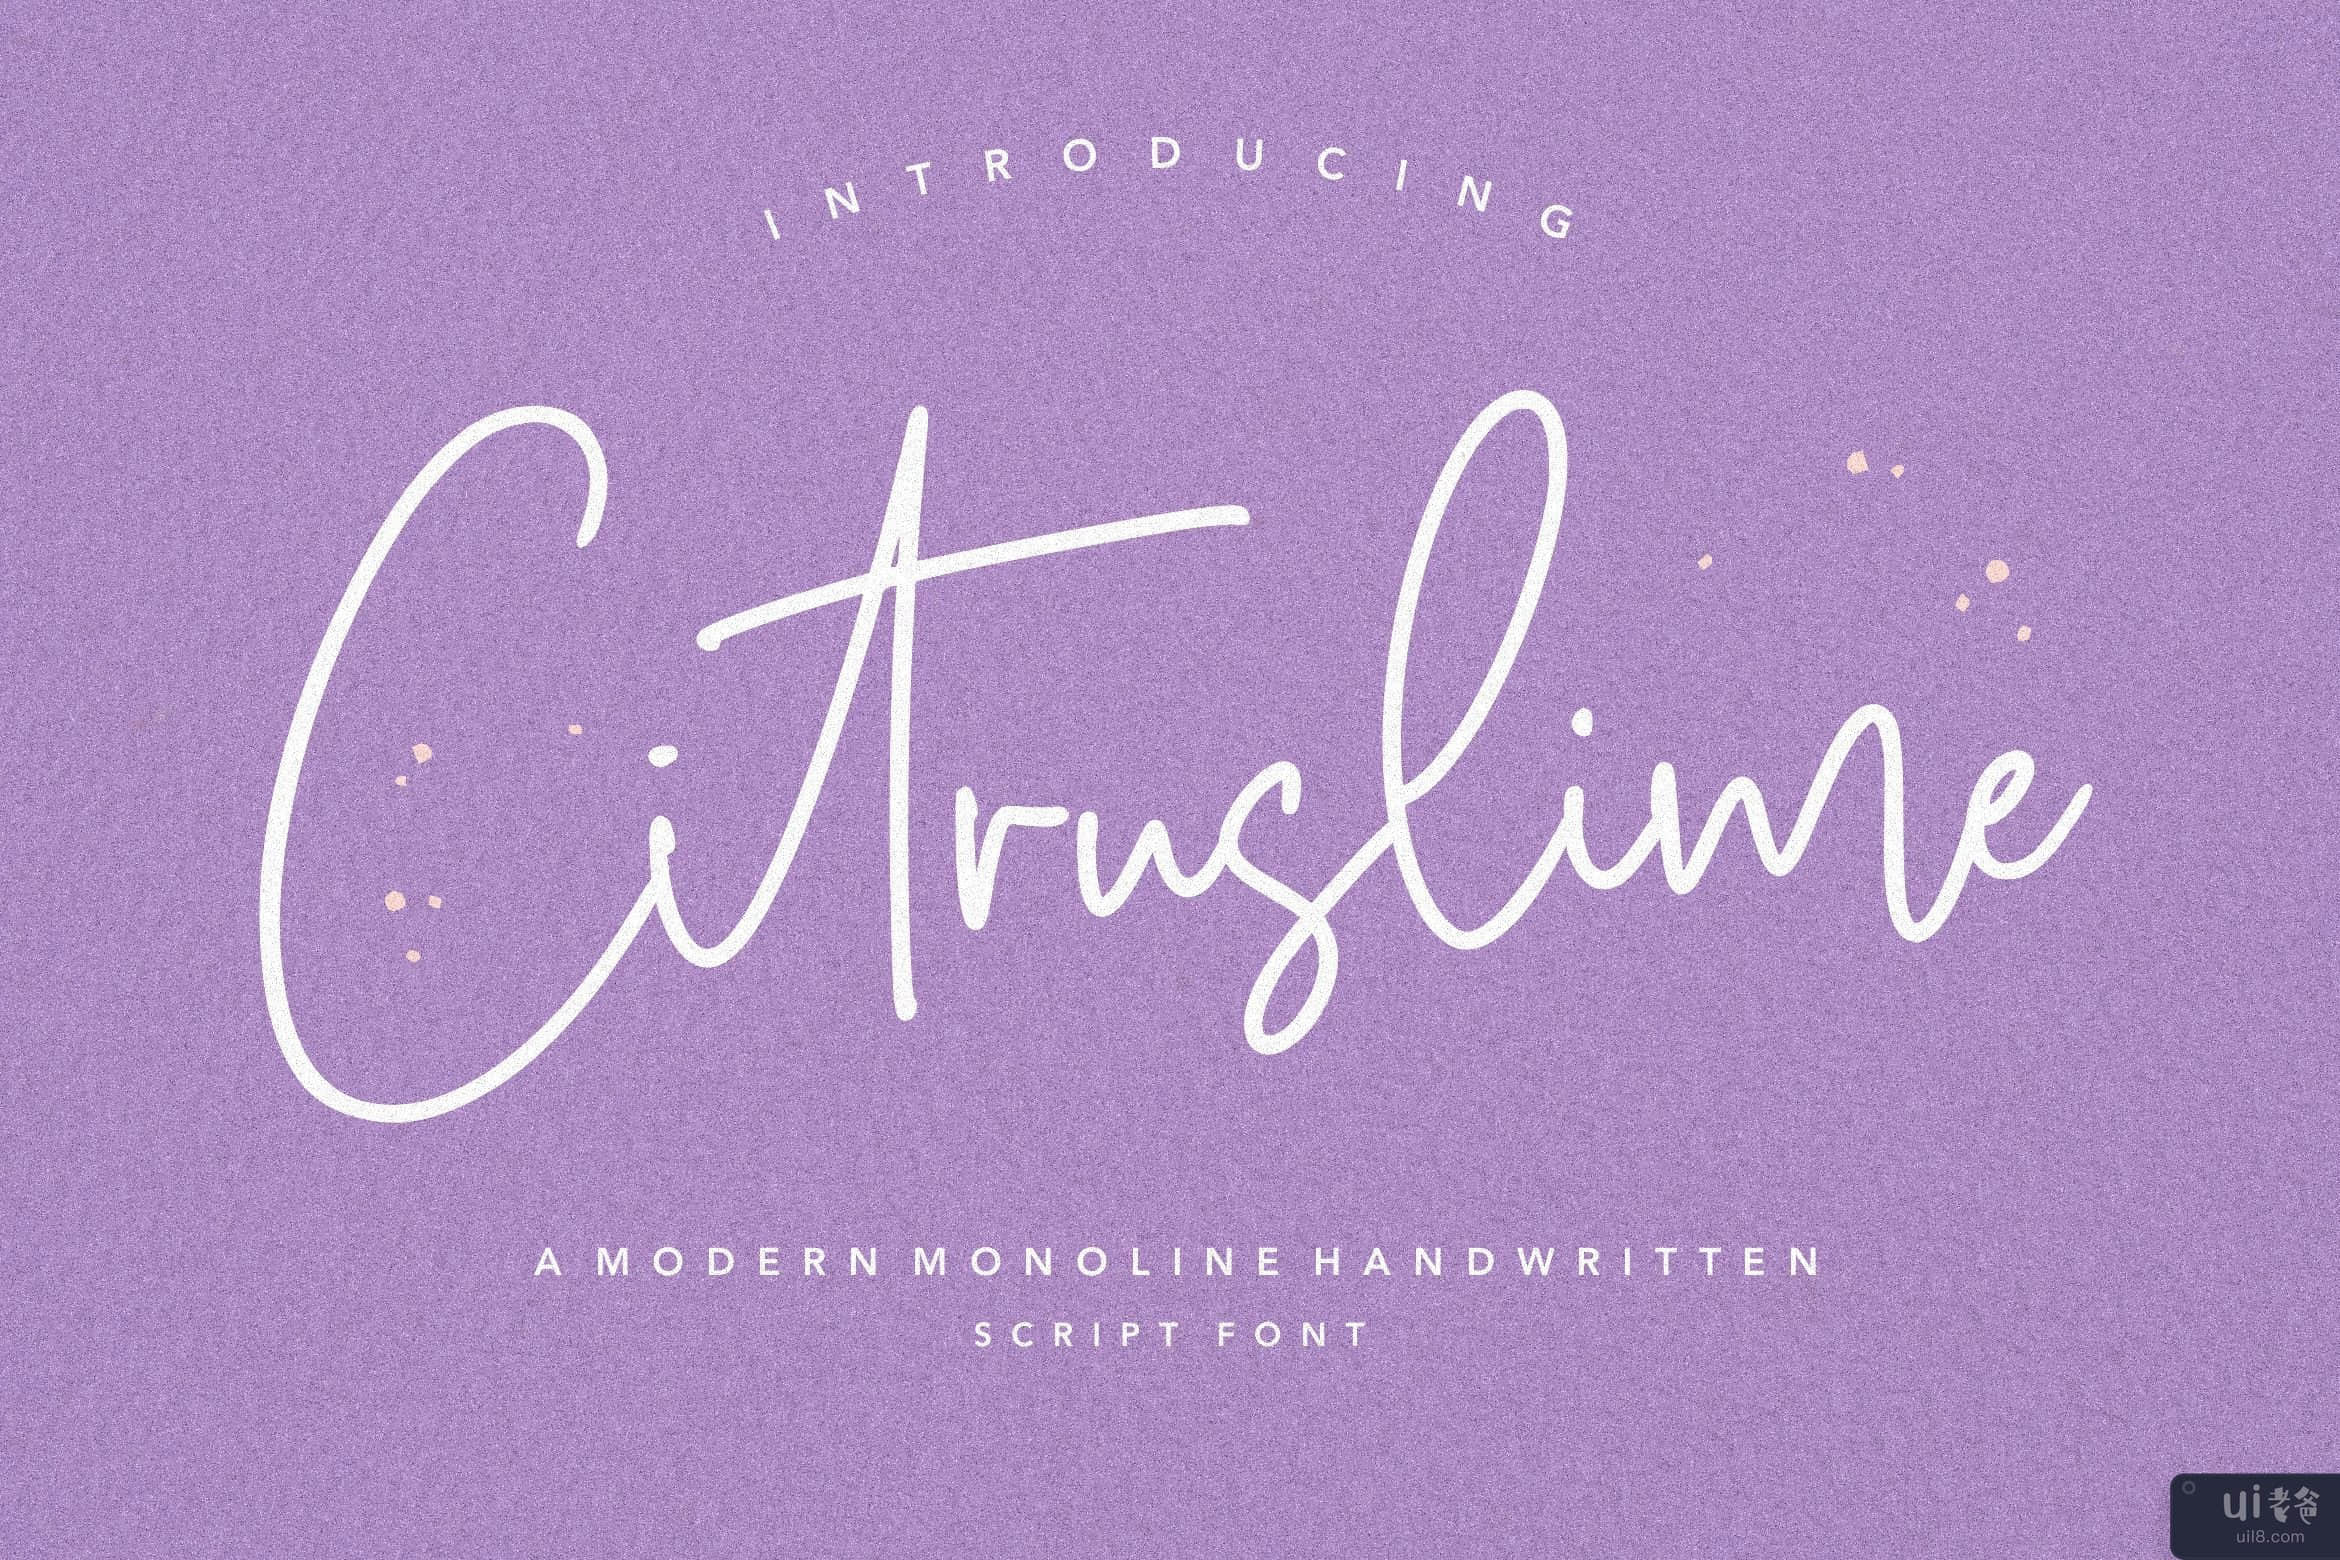 Citruslime 是一种现代单行手写脚本字体(Citruslime is a Modern Monoline Handwritten Script Font)插图8